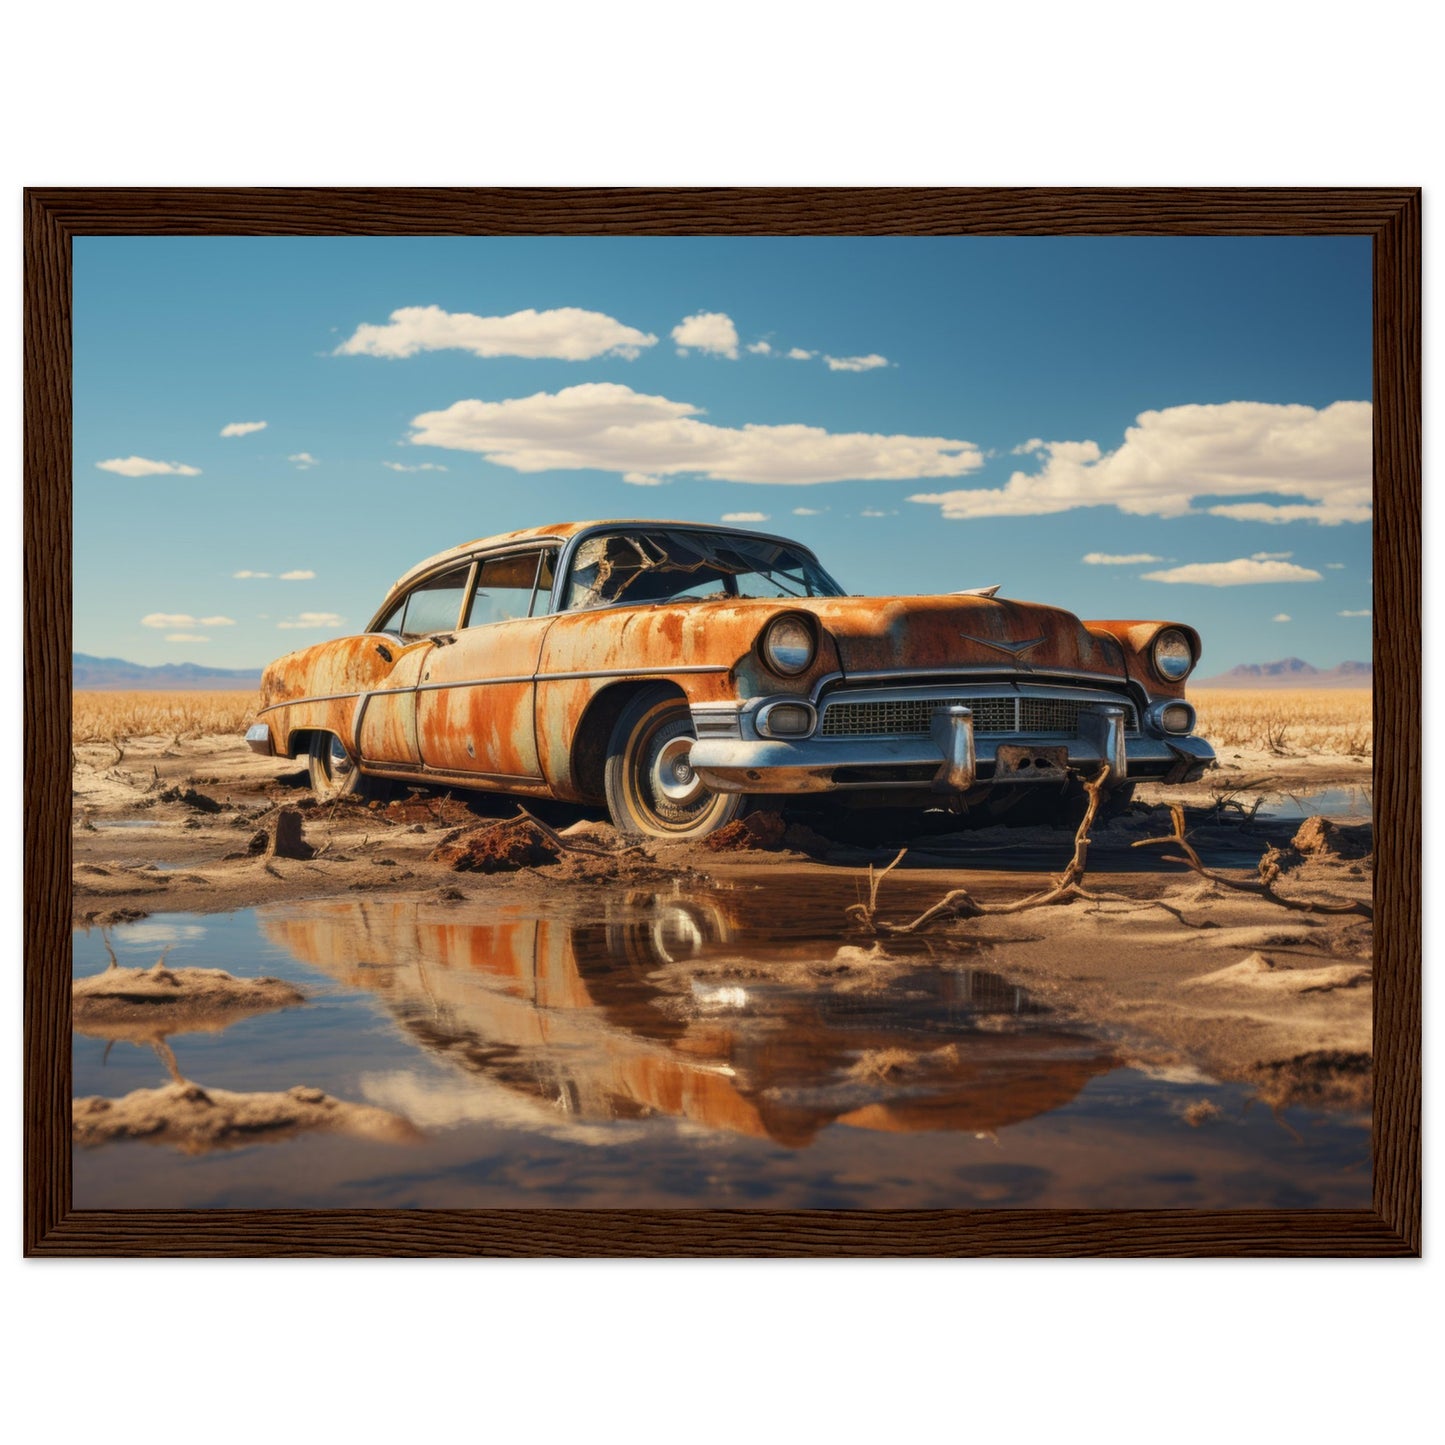 Rust - Photorealistic Wall Art Print Abandoned Car